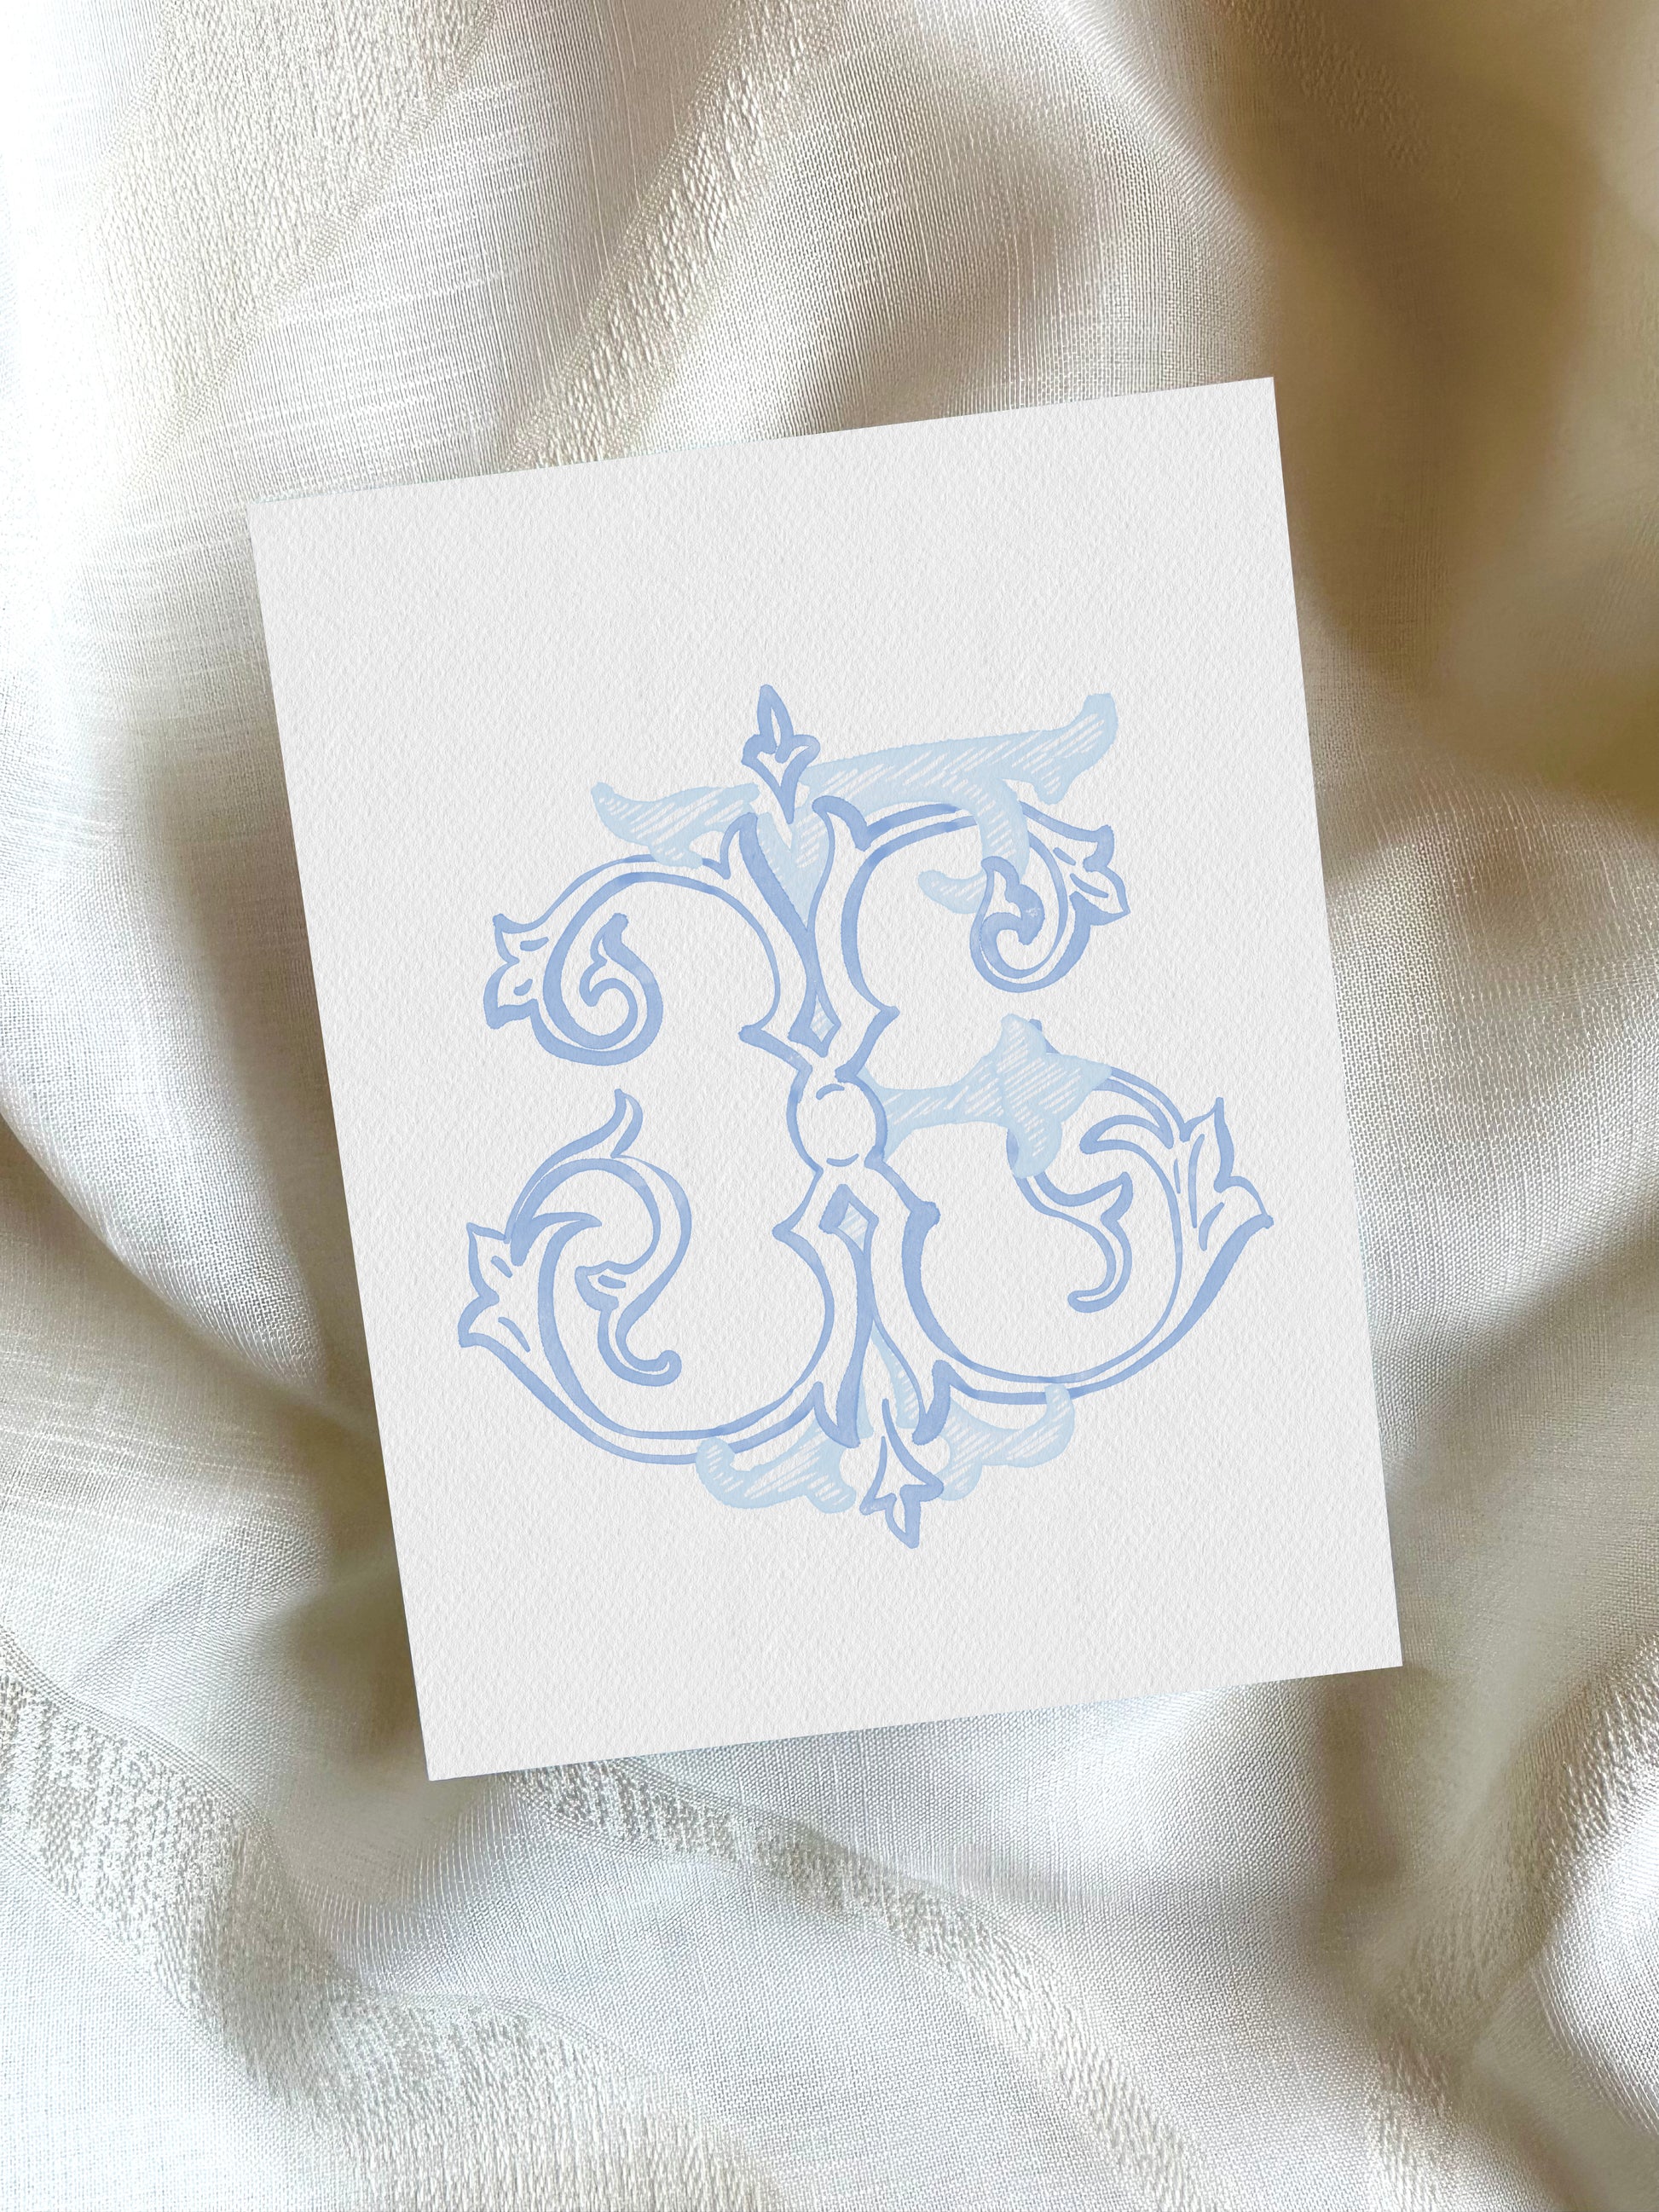 2 Letter Monogram with Letters FX XF | Digital Download - Wedding Monogram SVG, Personal Logo, Wedding Logo for Wedding Invitations The Wedding Crest Lab